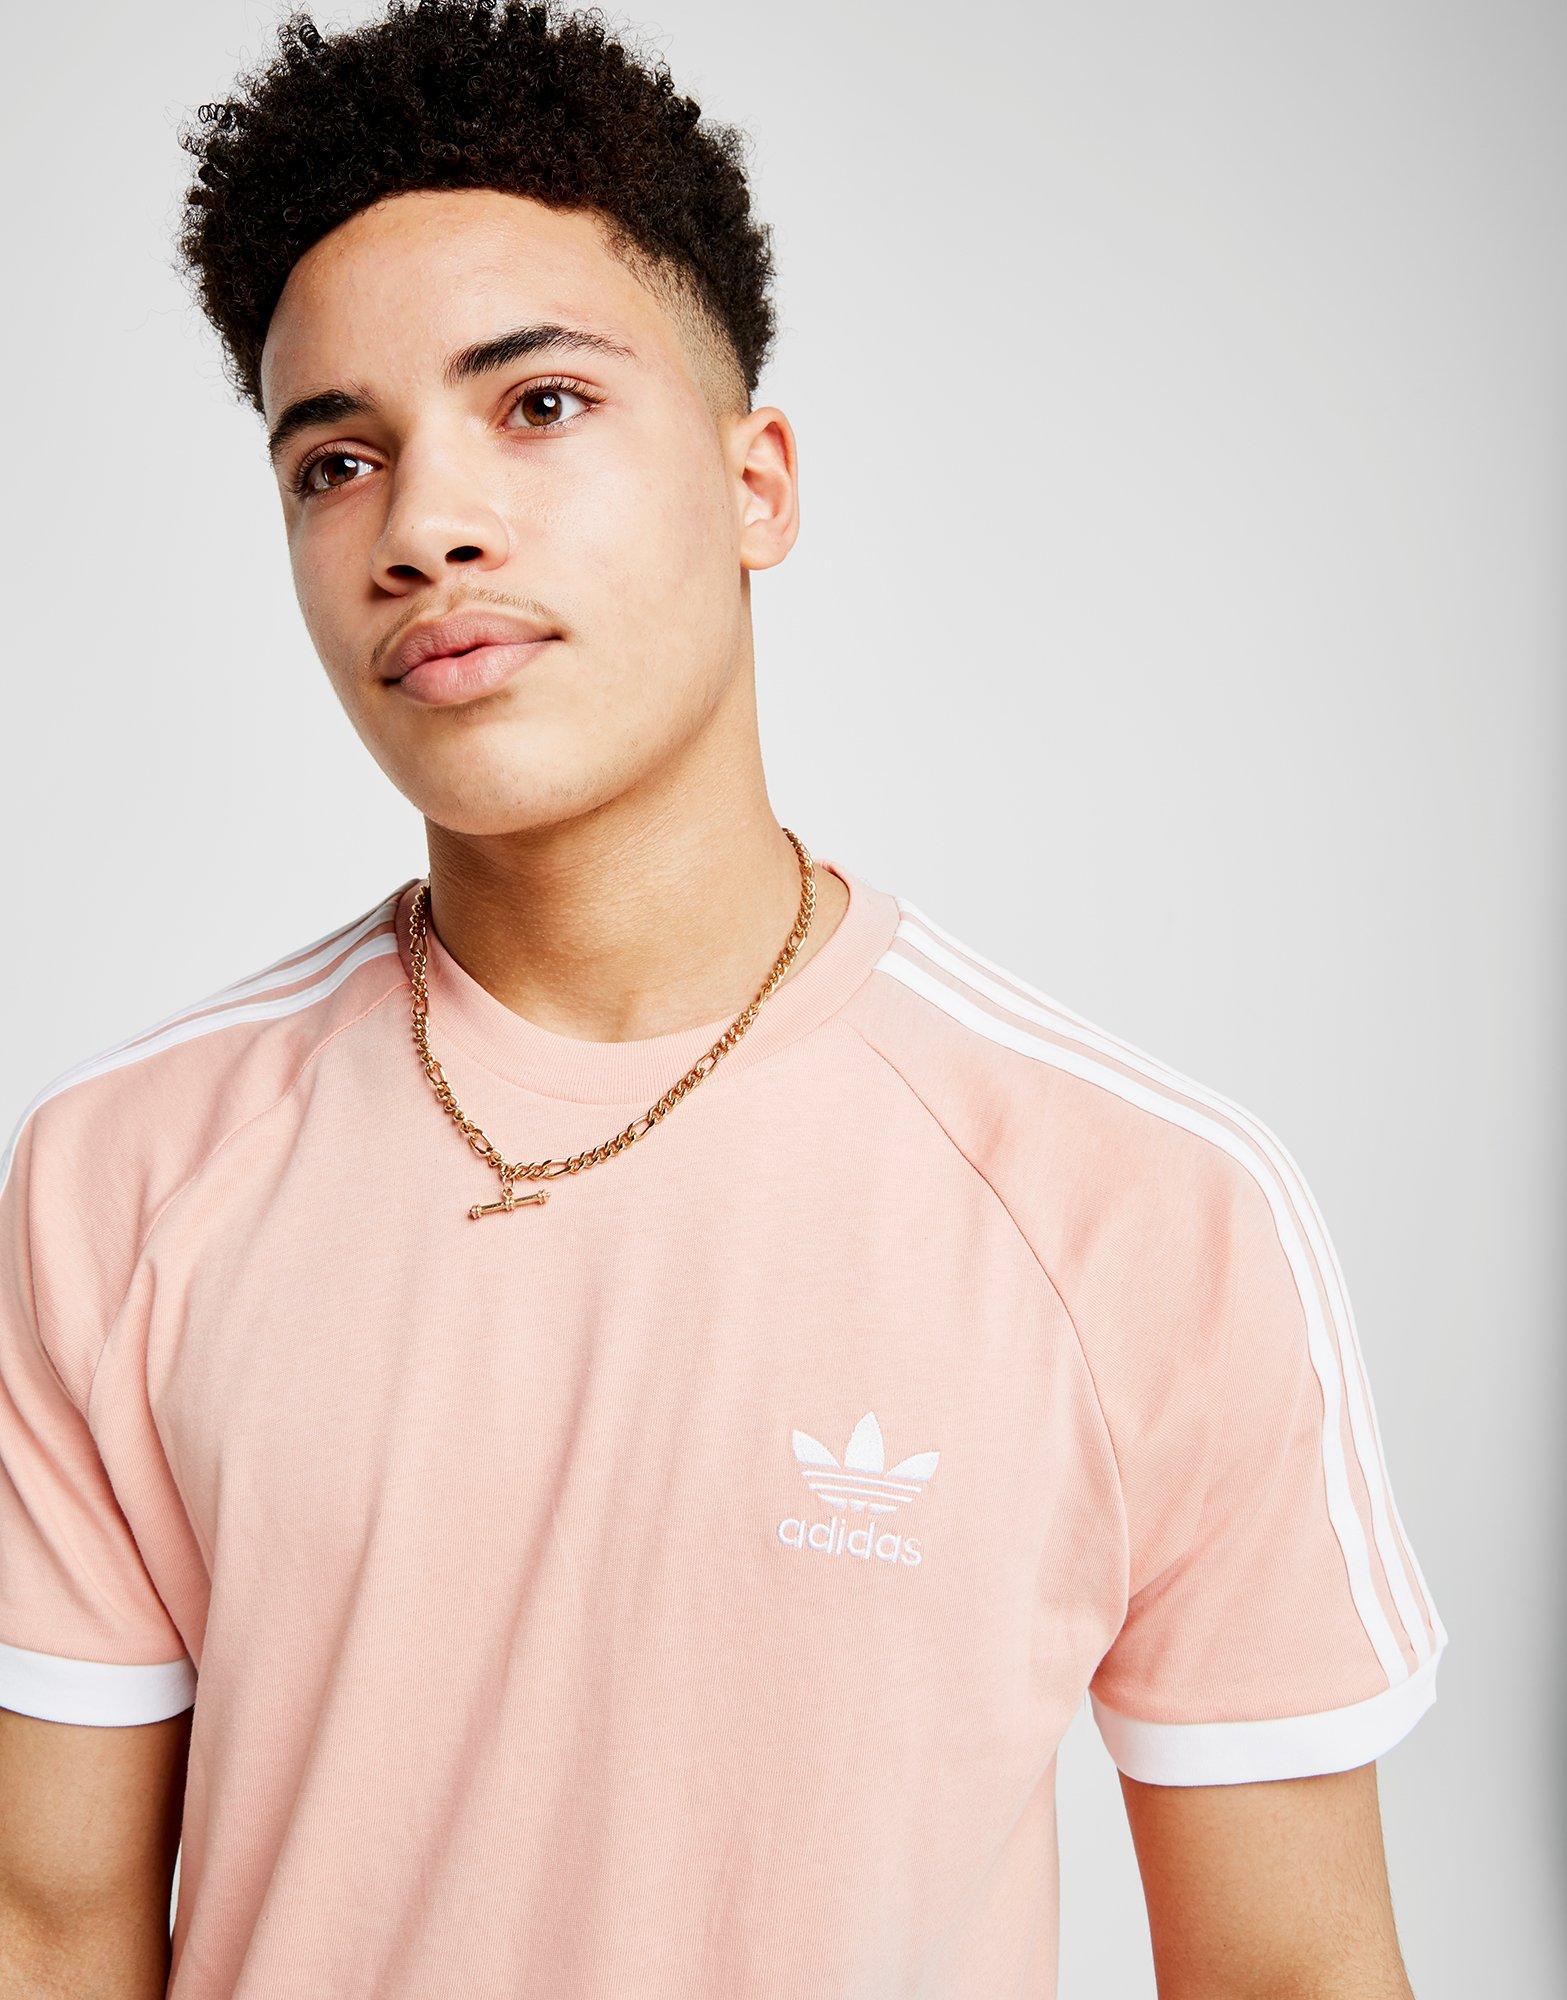 Adidas Originals T Shirt Pink Online Sale, UP TO 59% OFF